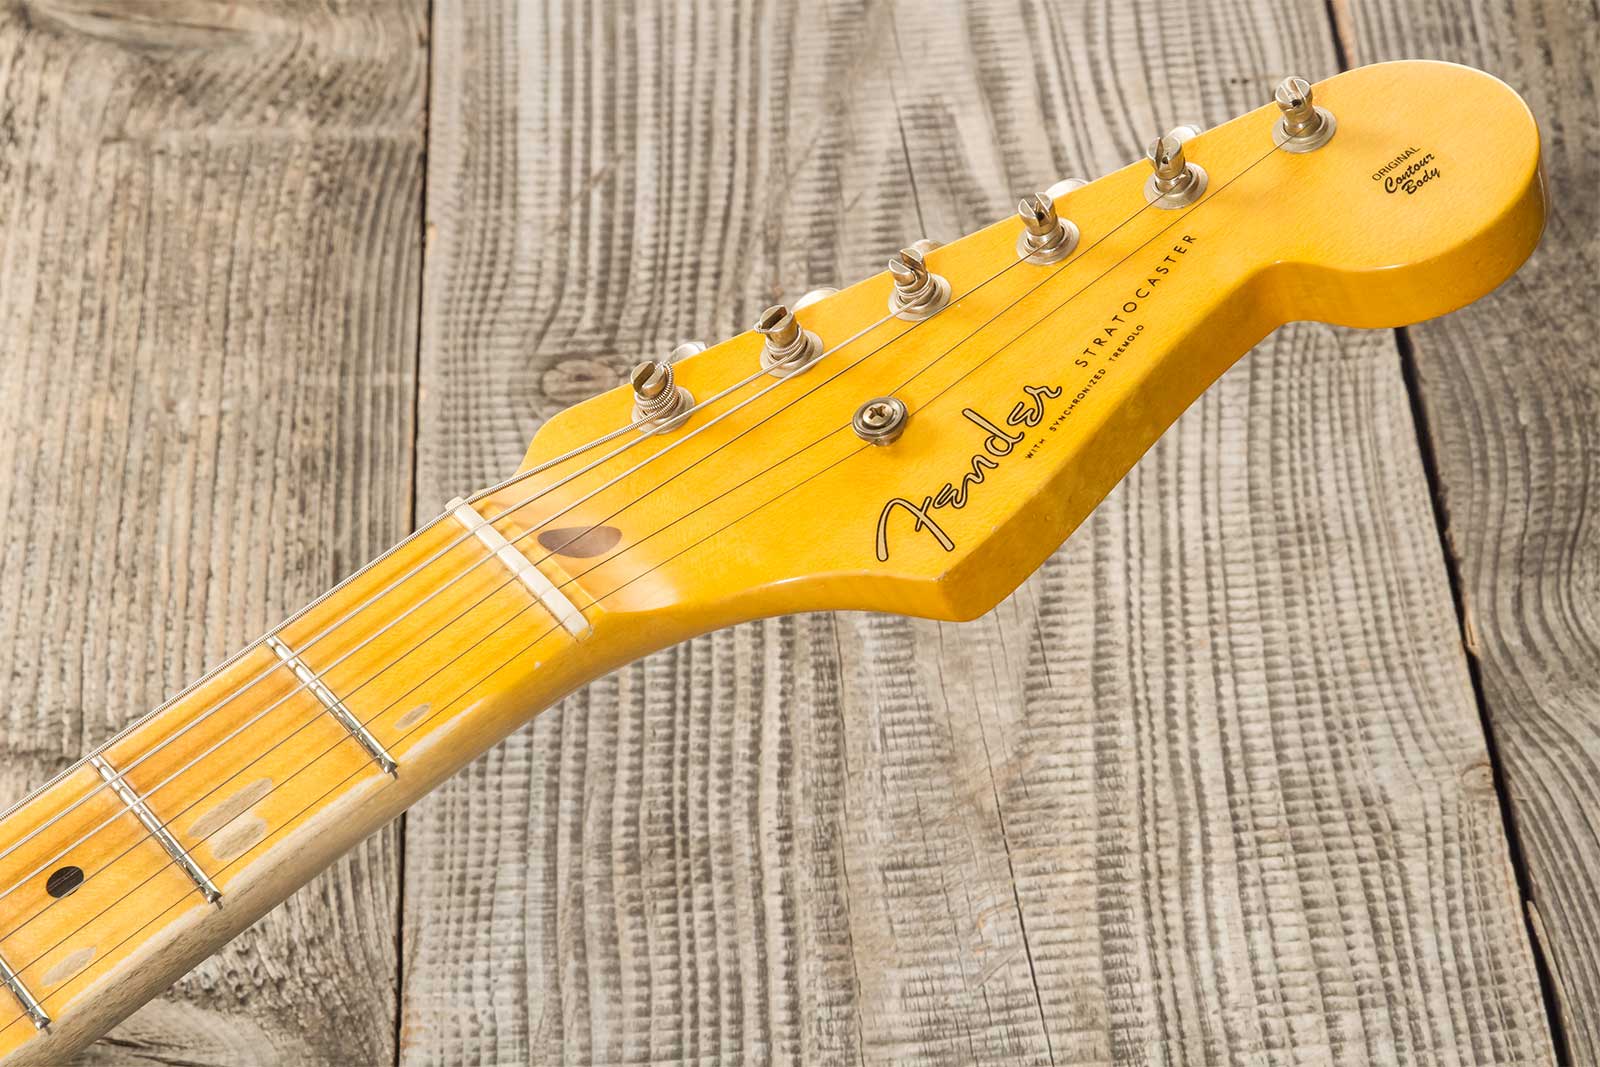 Fender Custom Shop Strat 1954 70th Anniv. 3s Trem Mn #xn4193 - Journeyman Relic Wide-fade 2-color Sunburst - Guitare Électrique Forme Str - Variation 